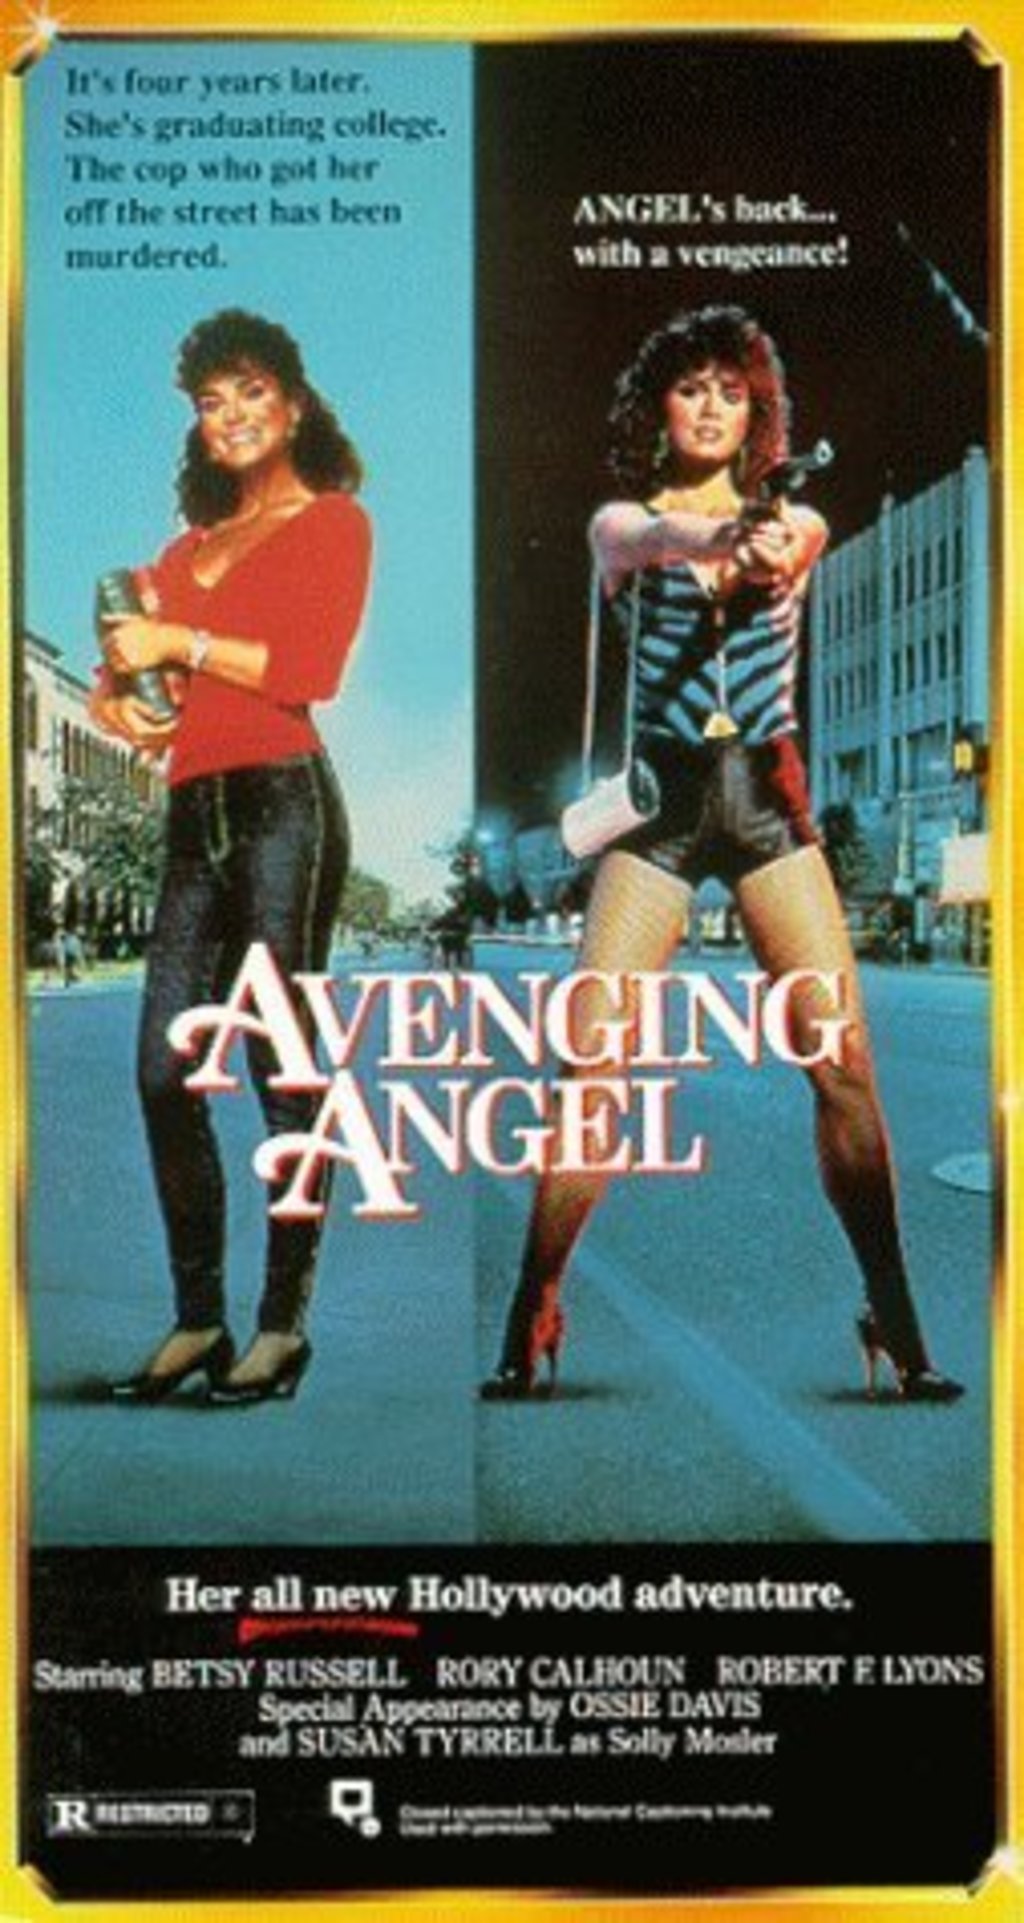 Watch Avenging Angel on Netflix Today! | NetflixMovies.com